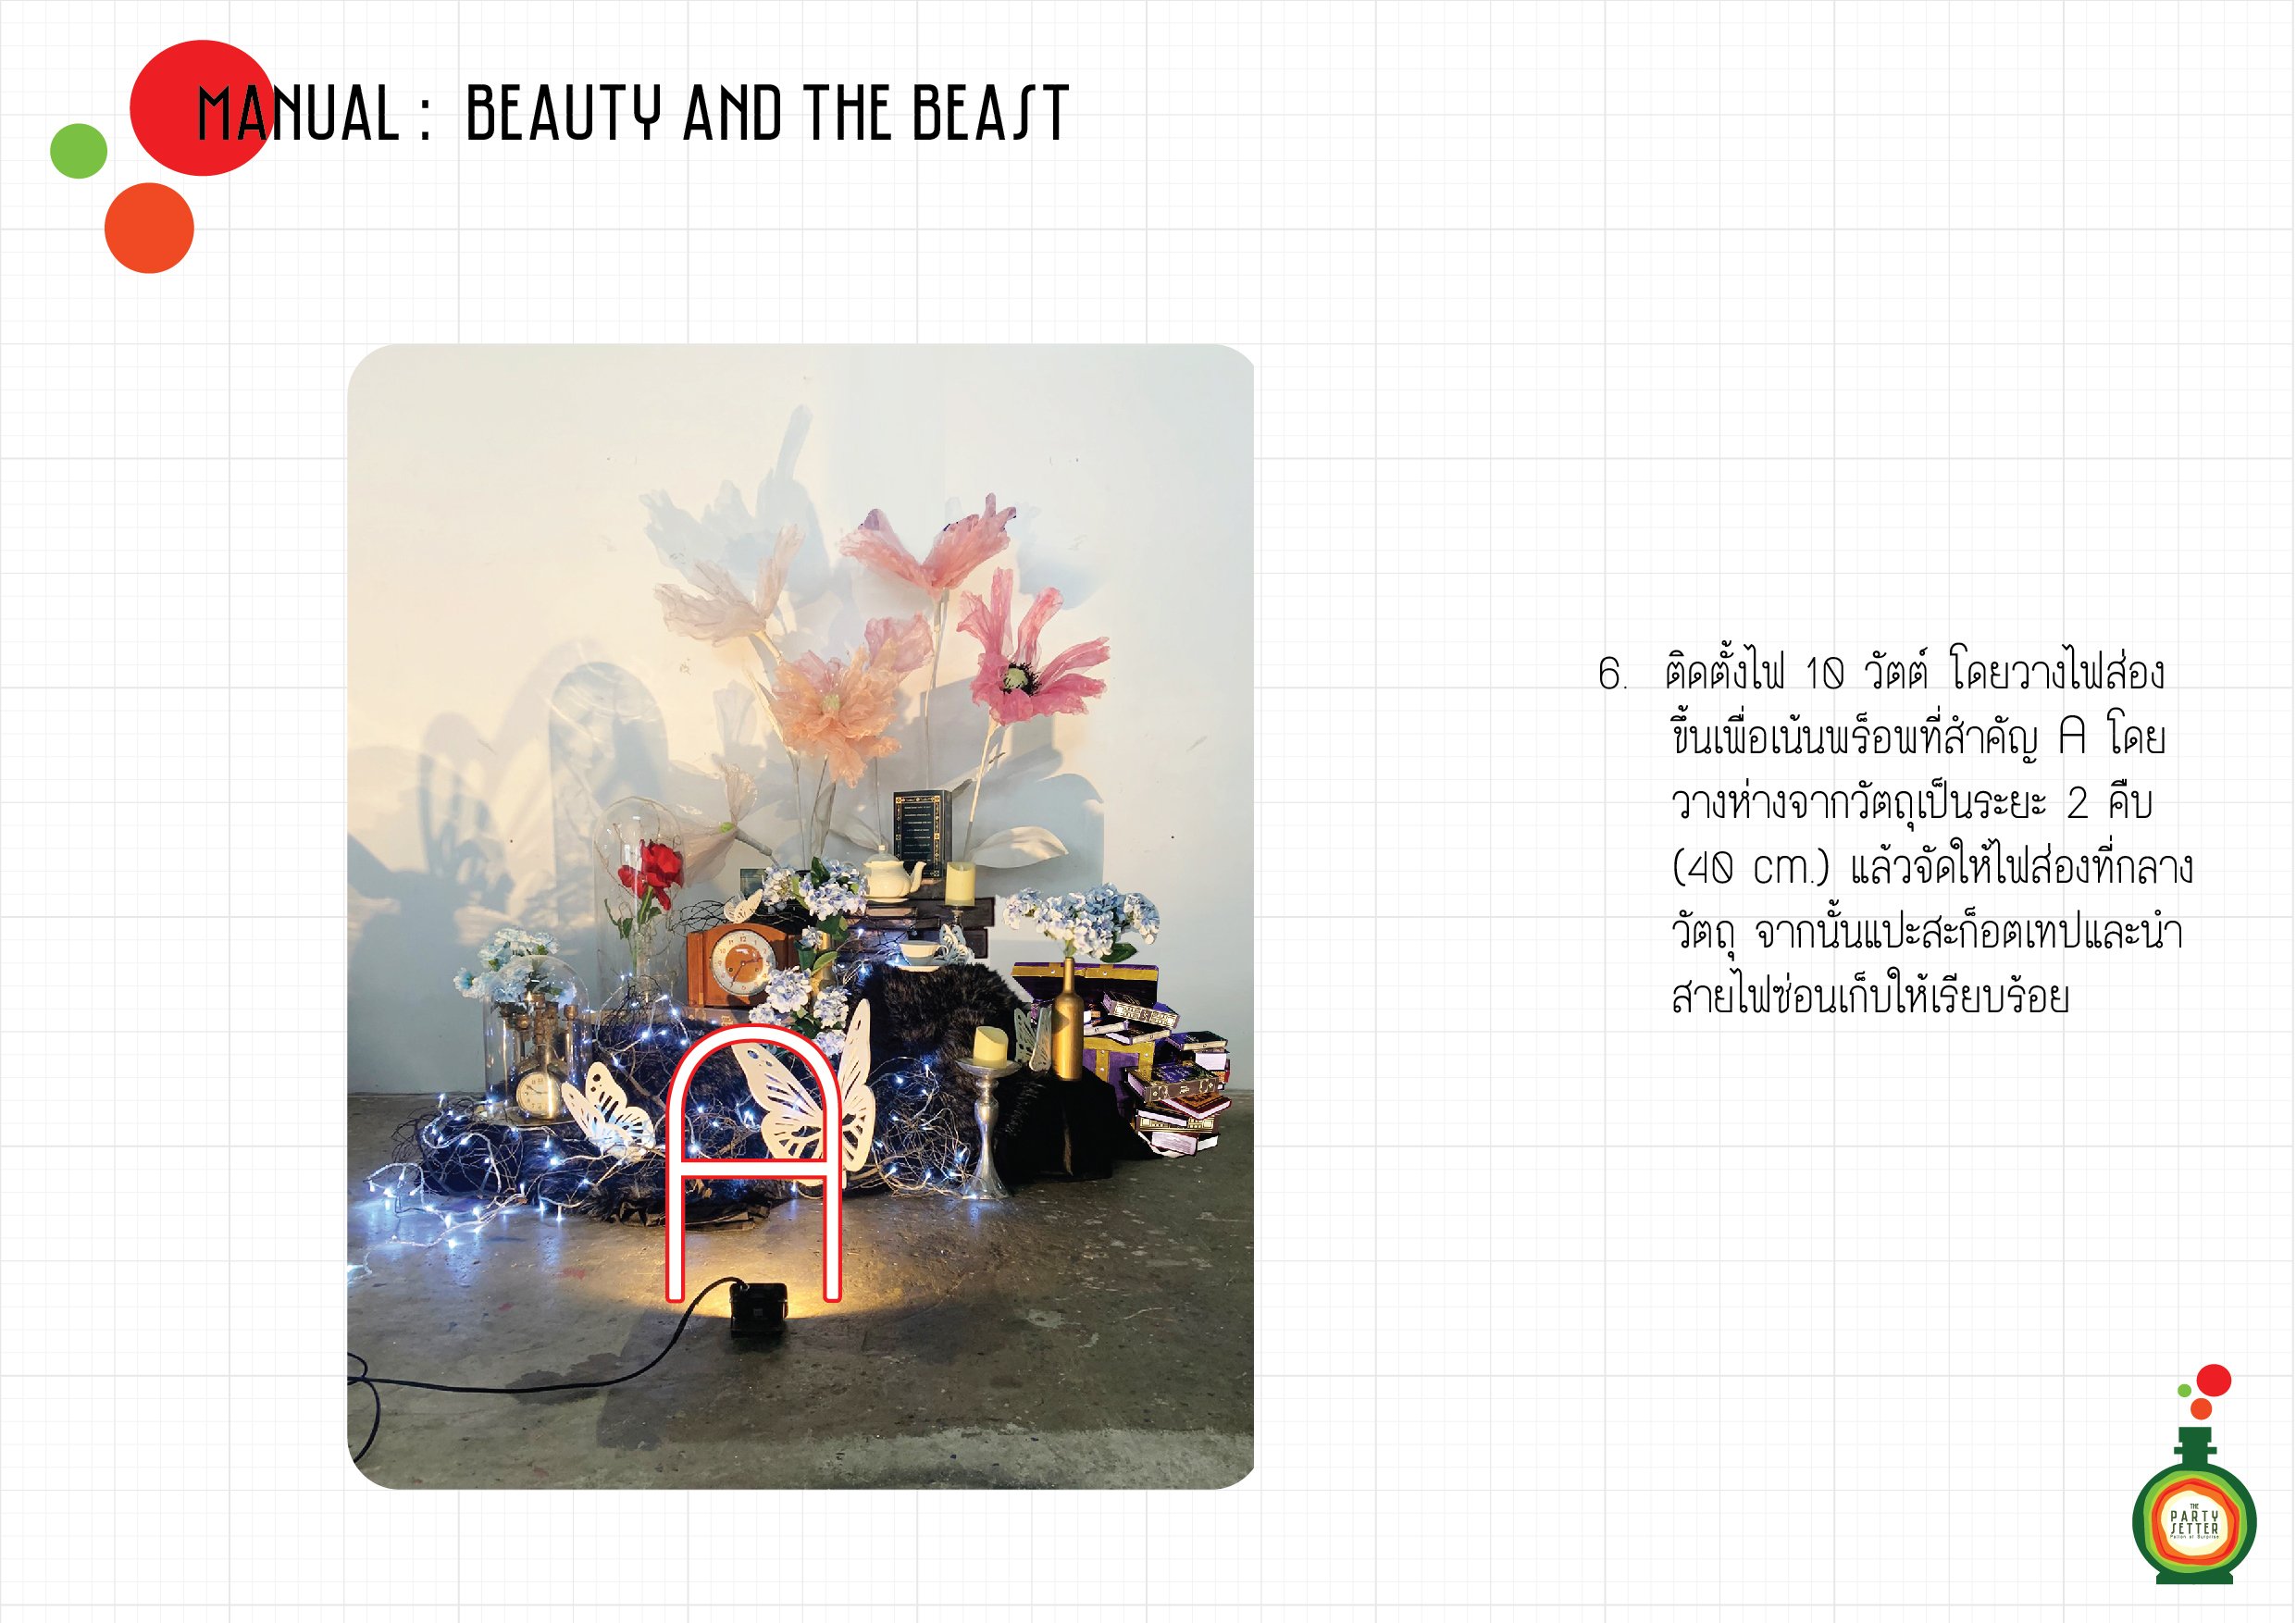 Manual_Beauty and the Beast-05-01.jpg